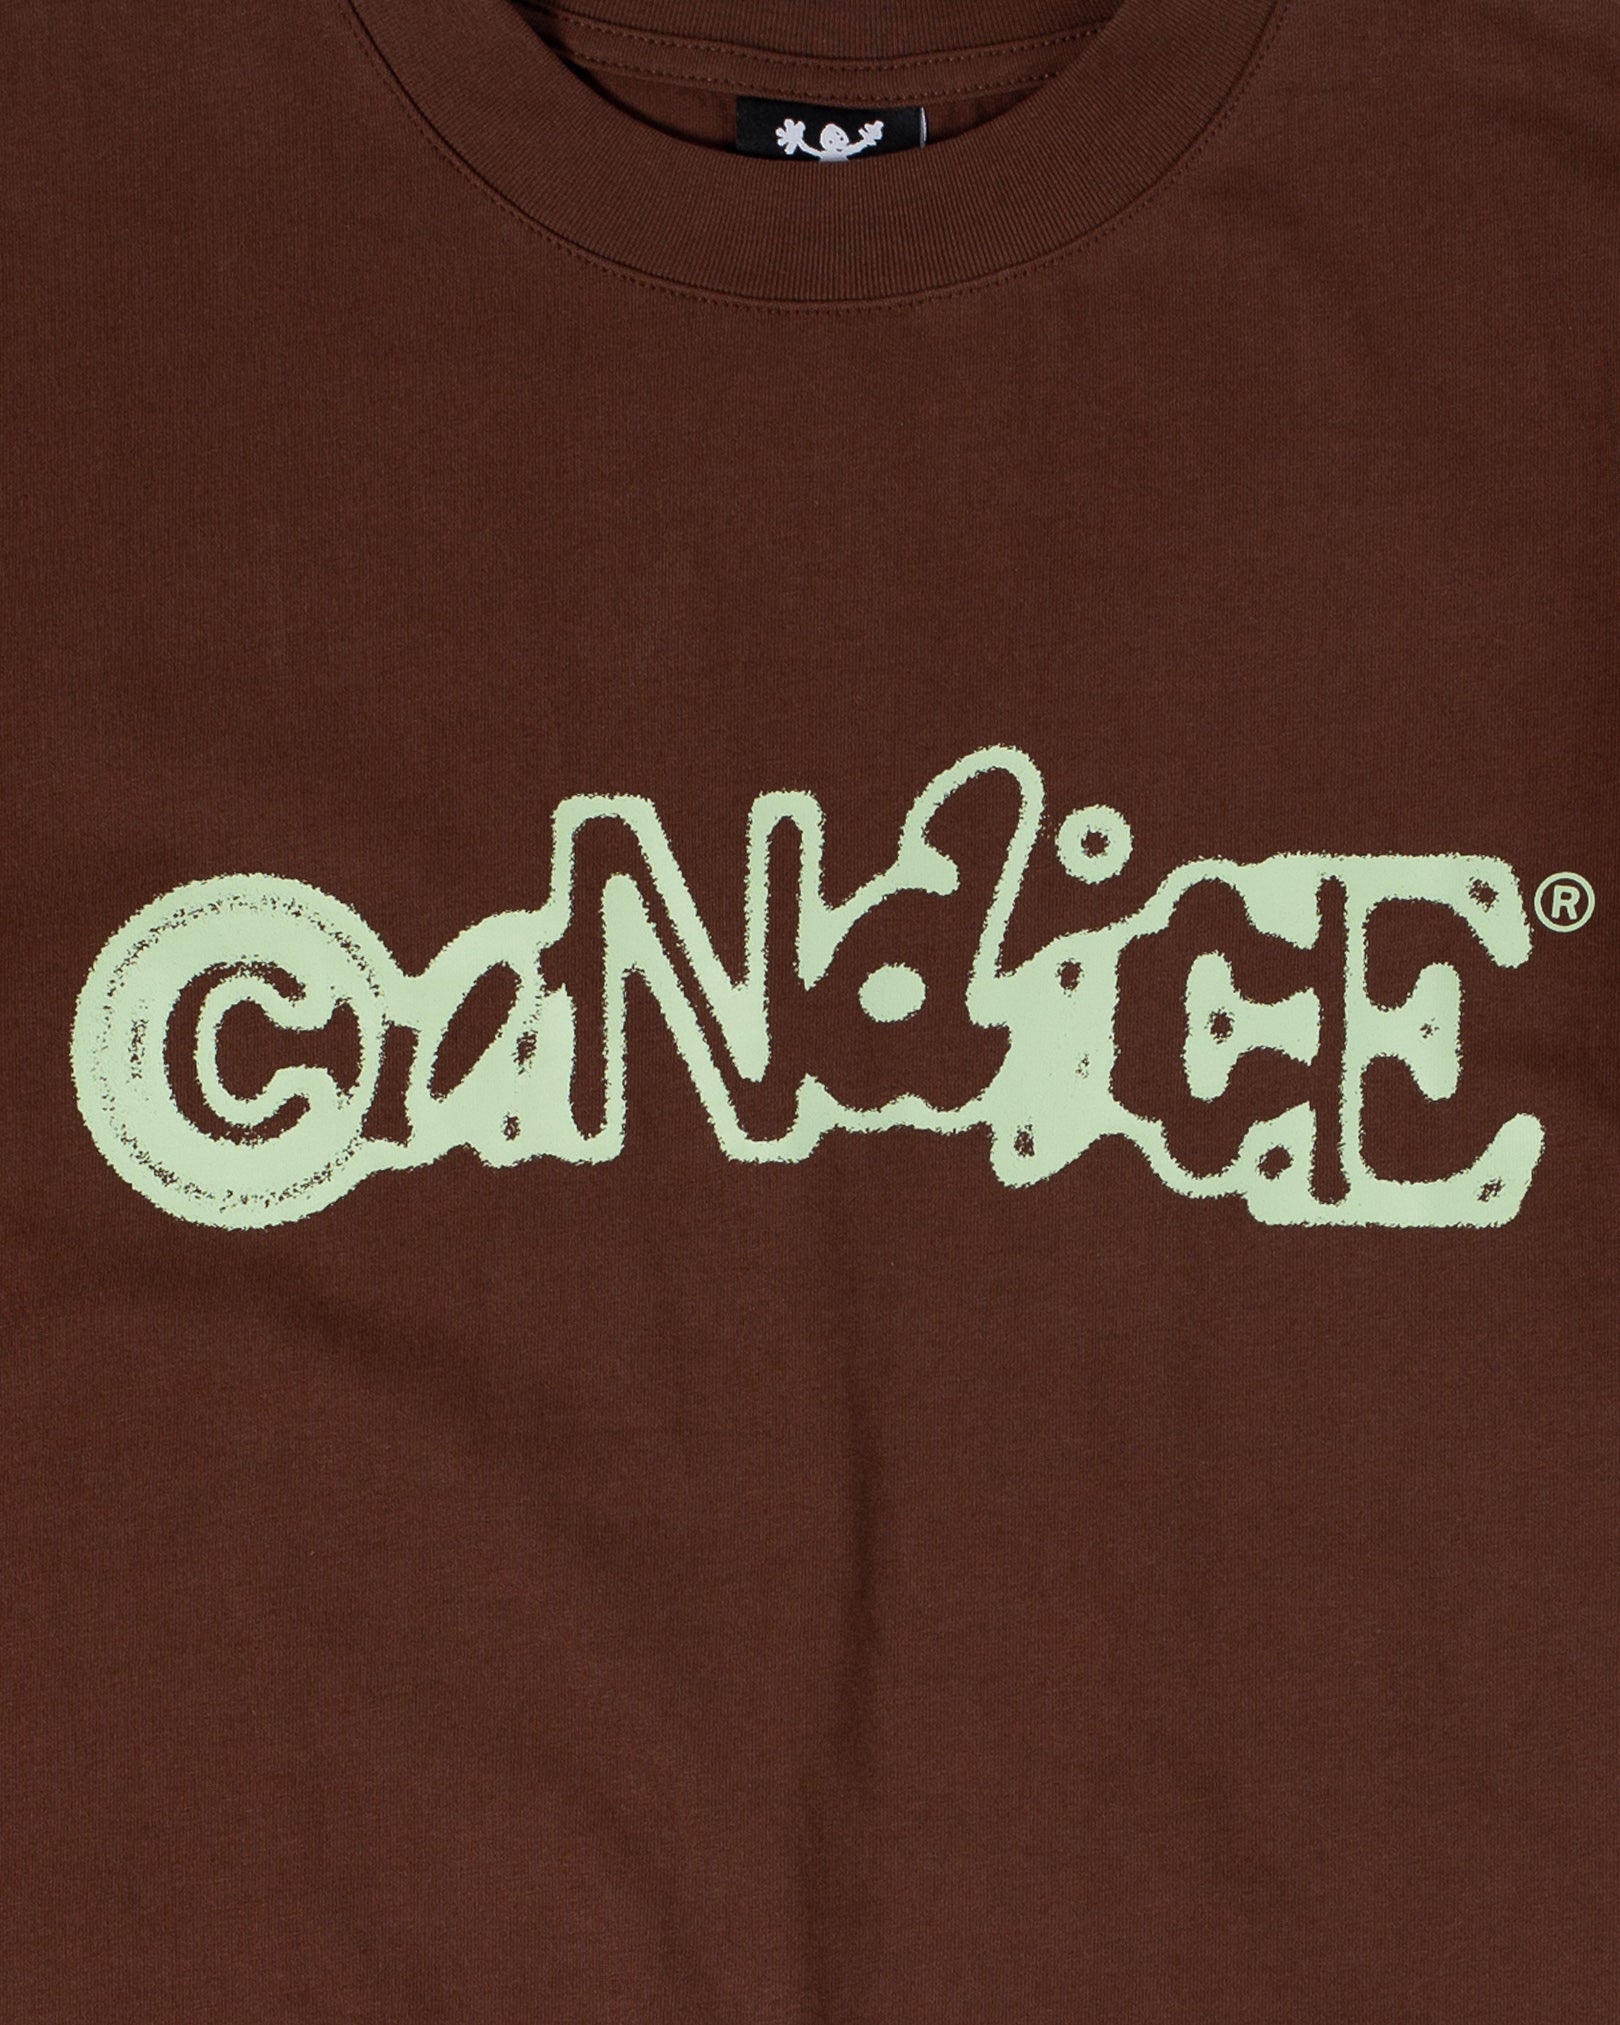 candice-boxy-tshirt-indulge-brown-print